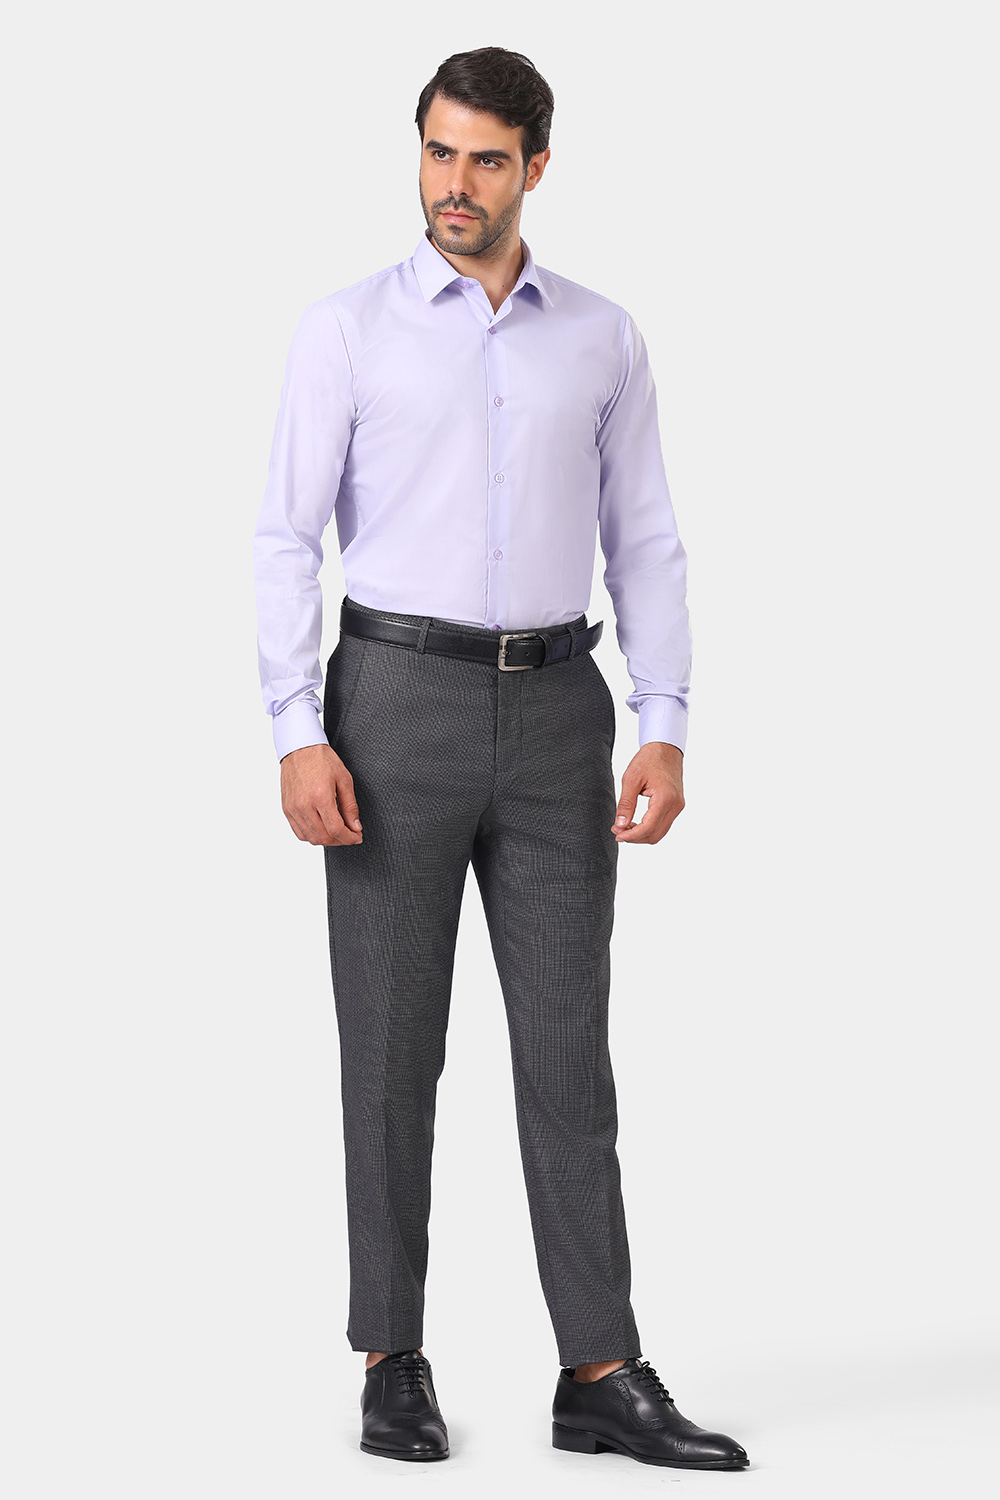 Dressing Purple Shirt Gray Pants Black Stock Photo 175274537 | Shutterstock